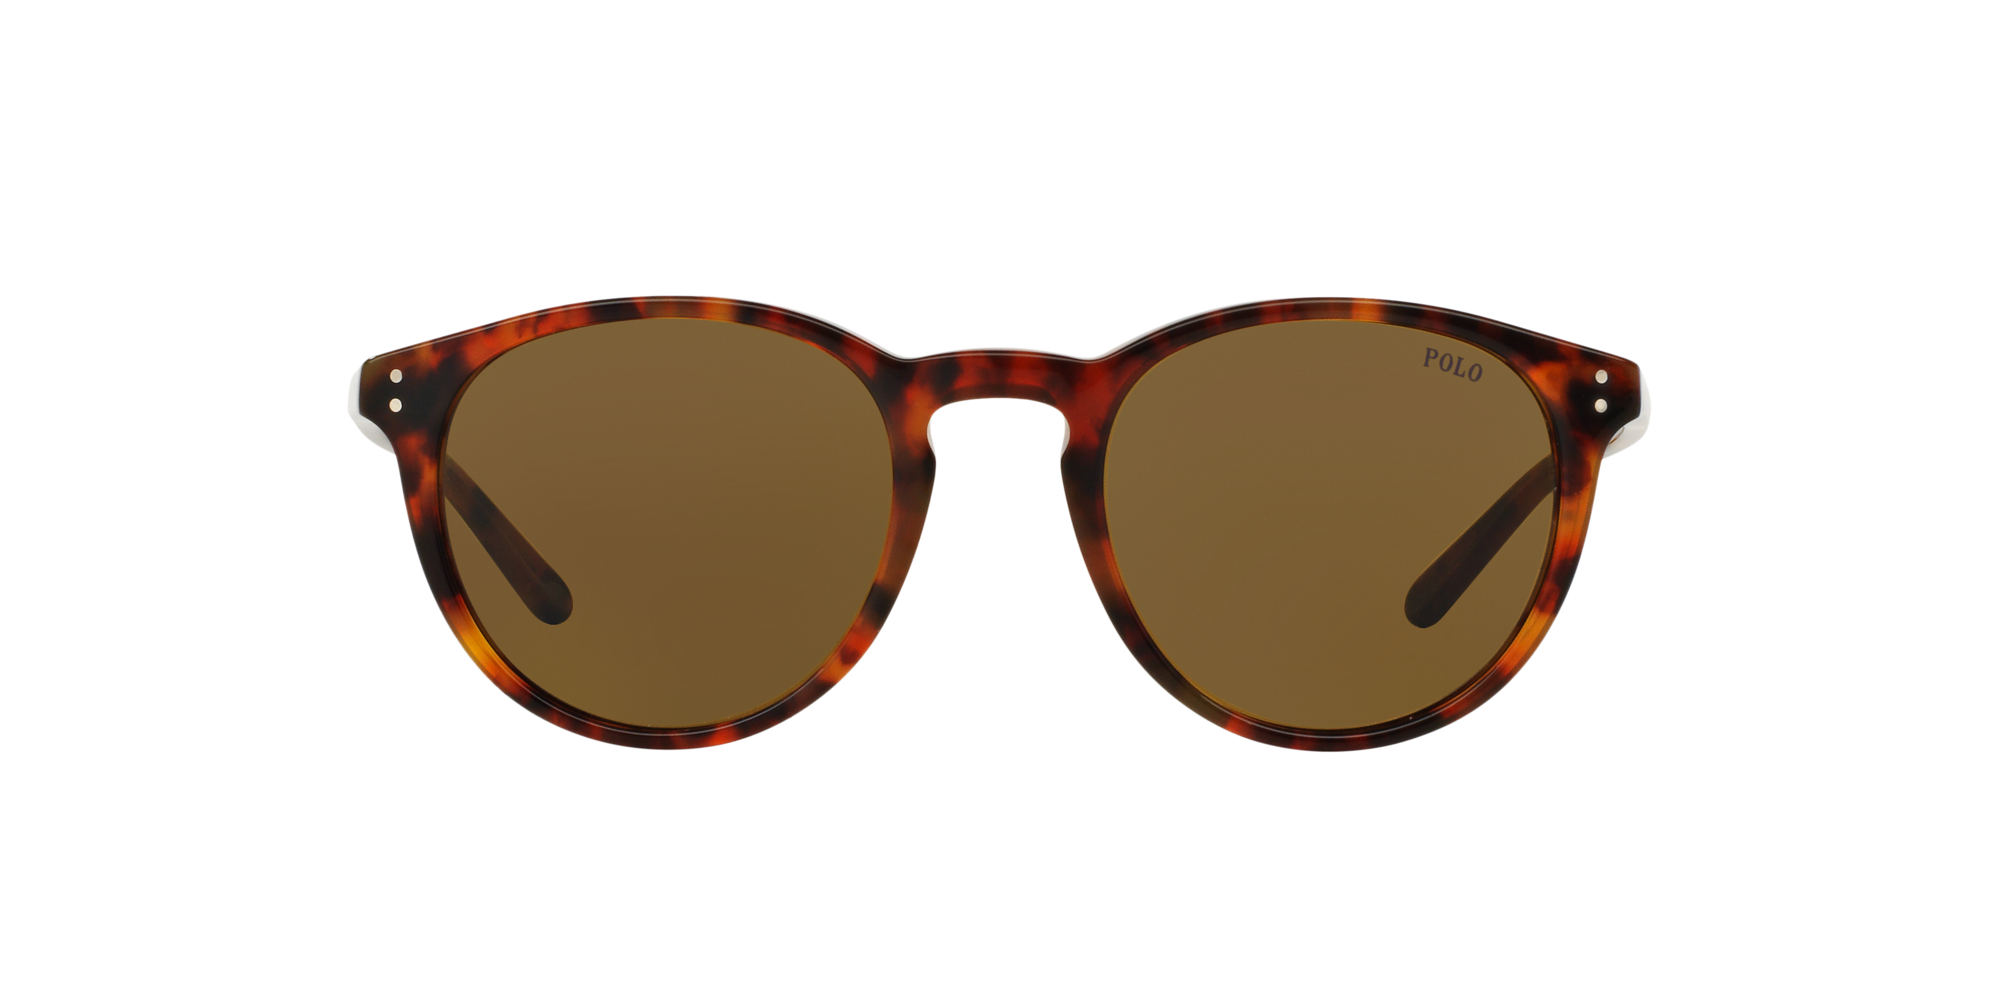 ralph lauren tortoise sunglasses